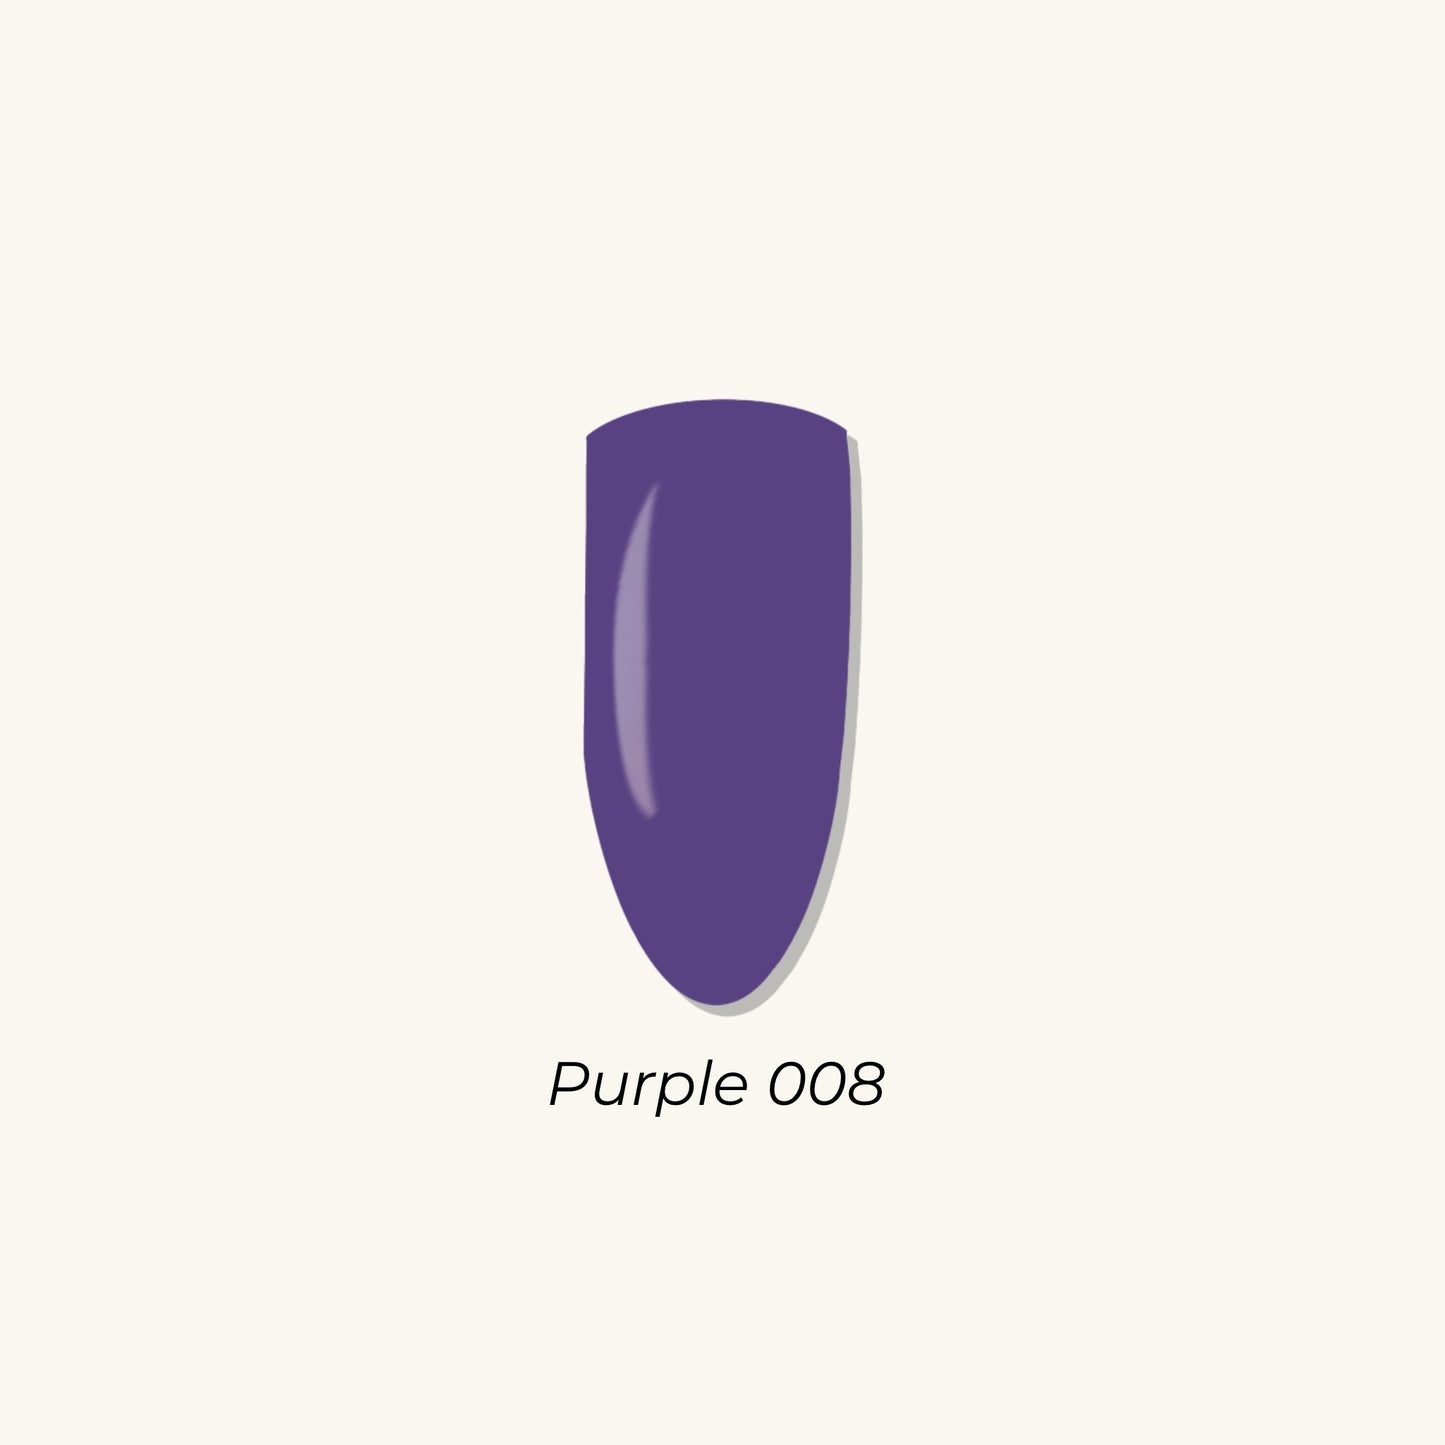 Purple 008